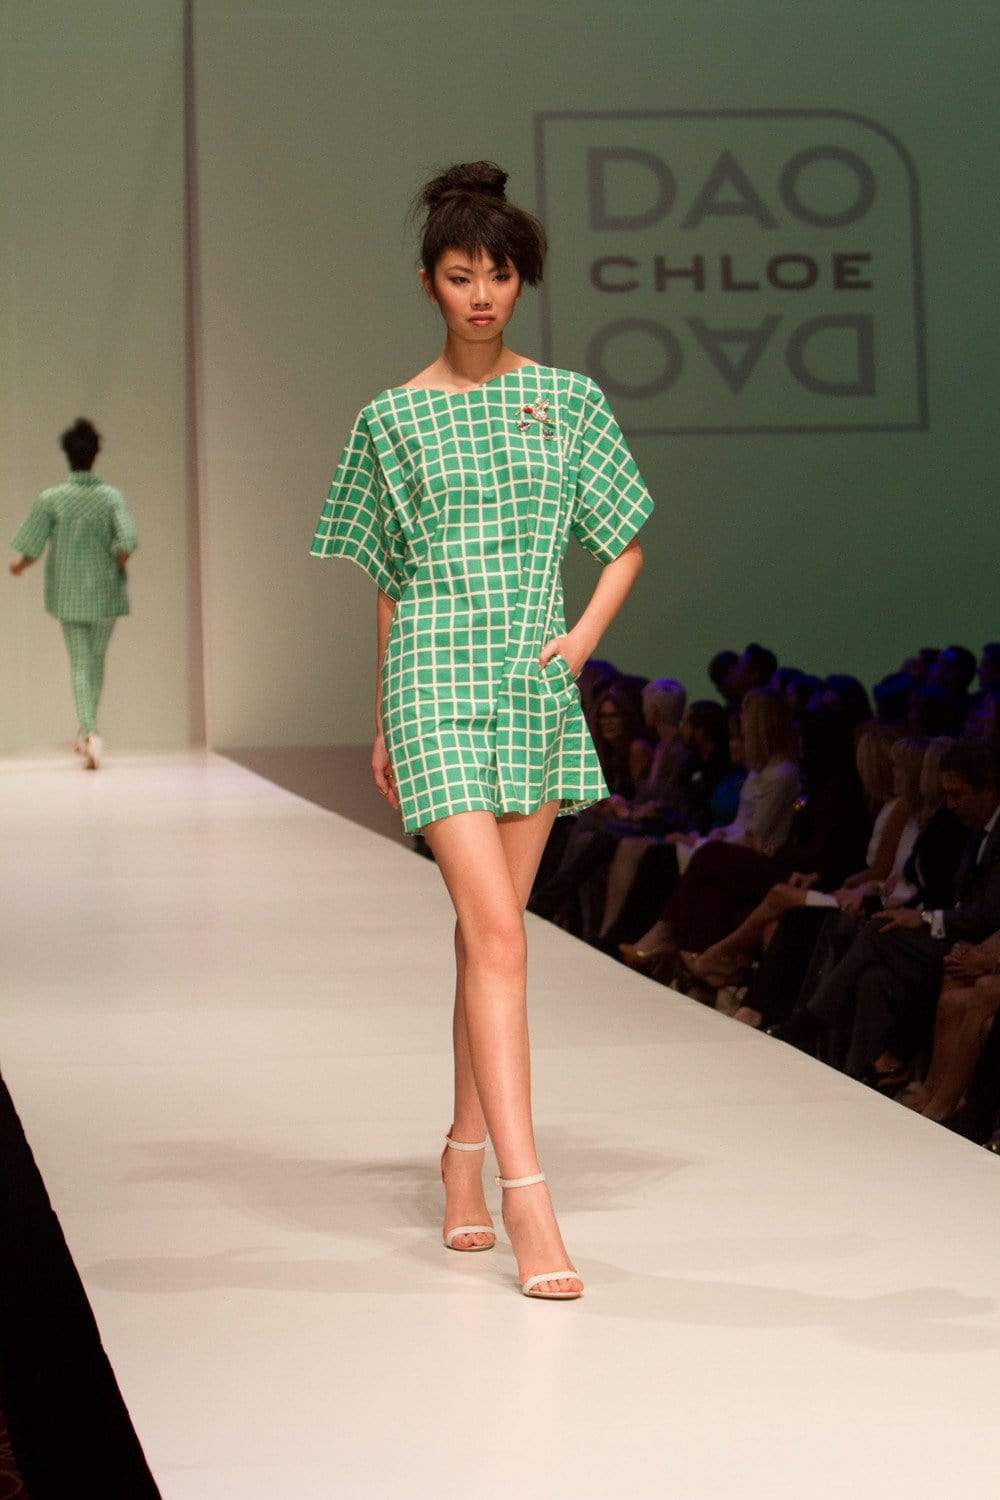 Joss Dress - Chloe Dao